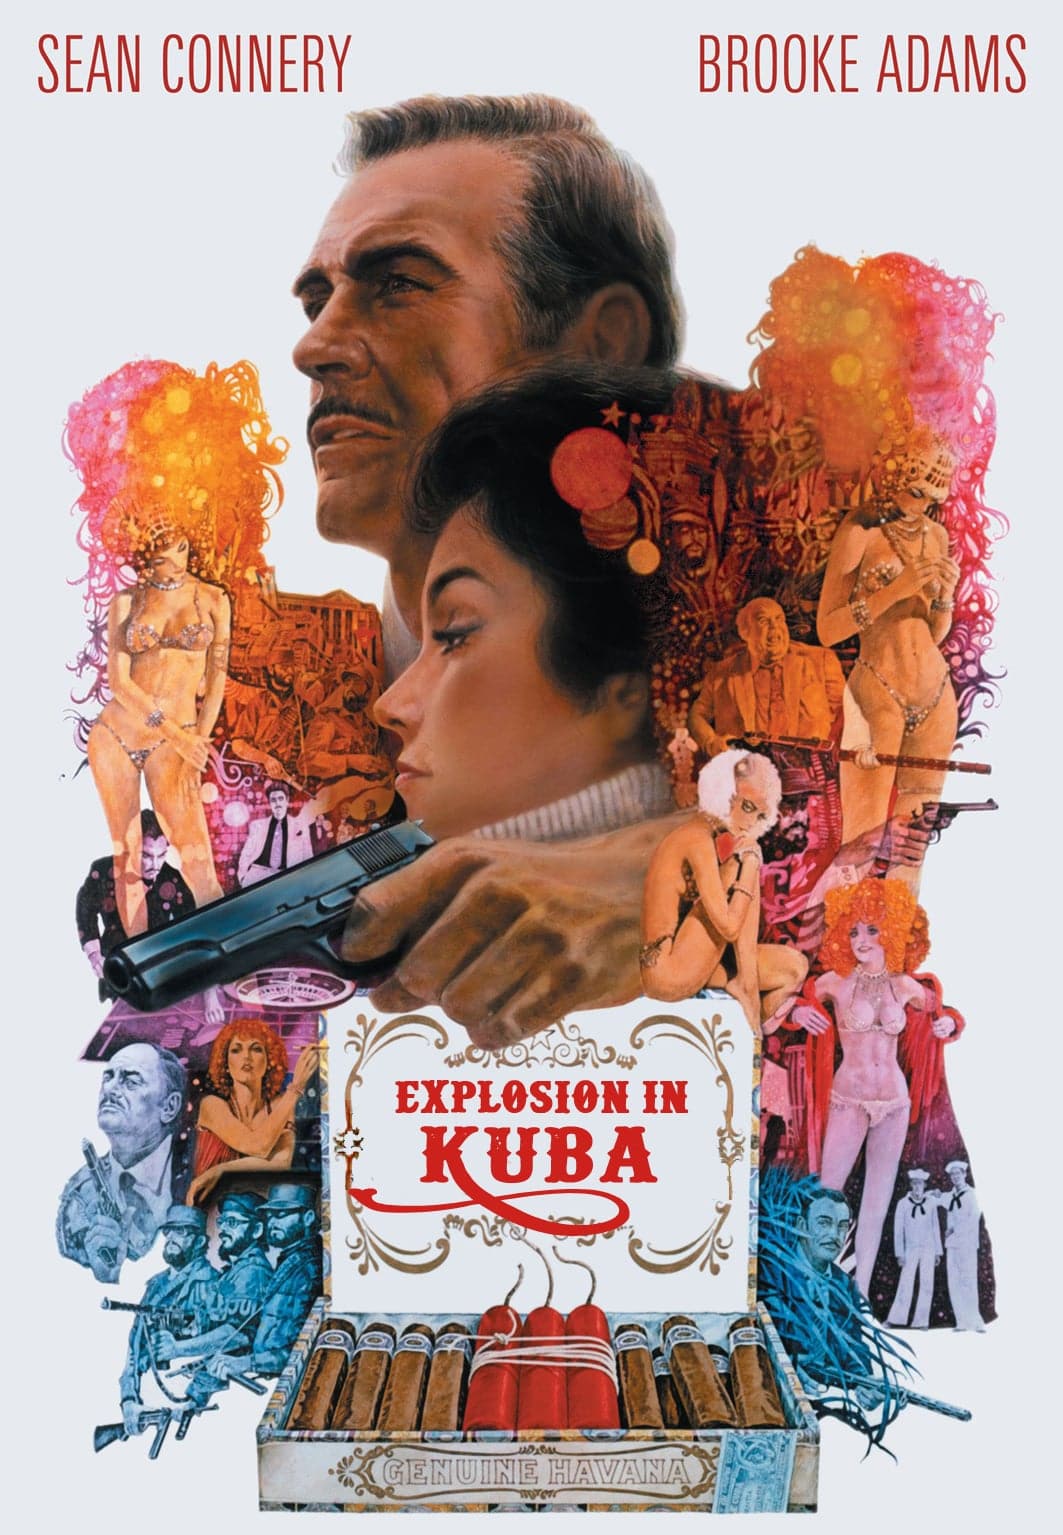 Plakat von "Explosion in Kuba"